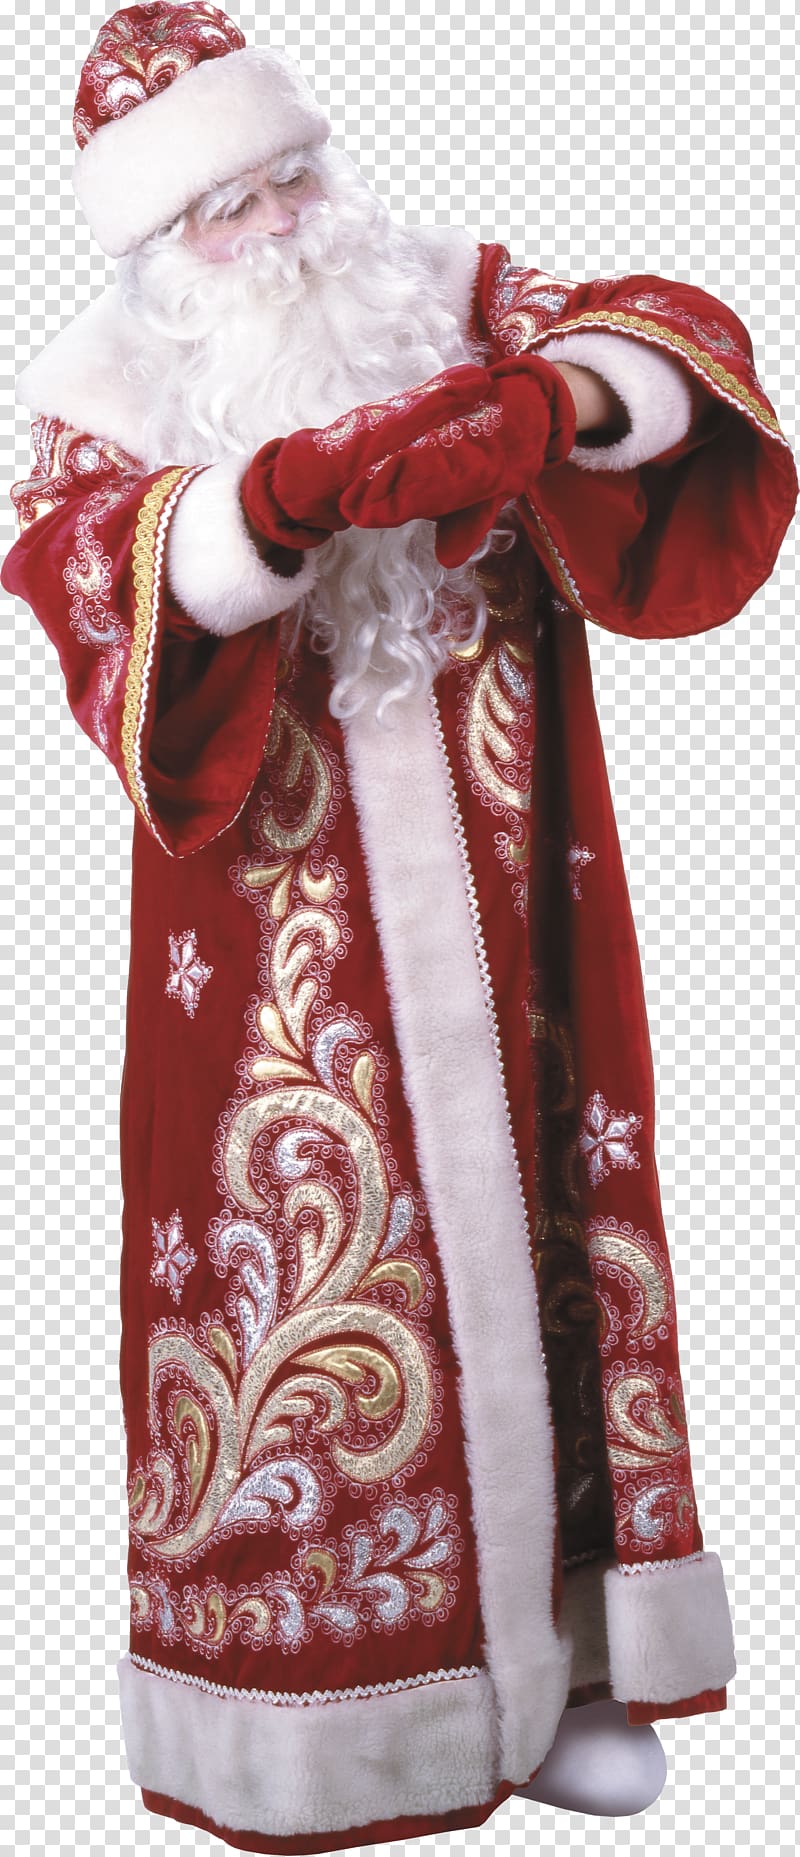 Santa Claus Snegurochka Ded Moroz Christmas ornament Christmas decoration, santa claus transparent background PNG clipart